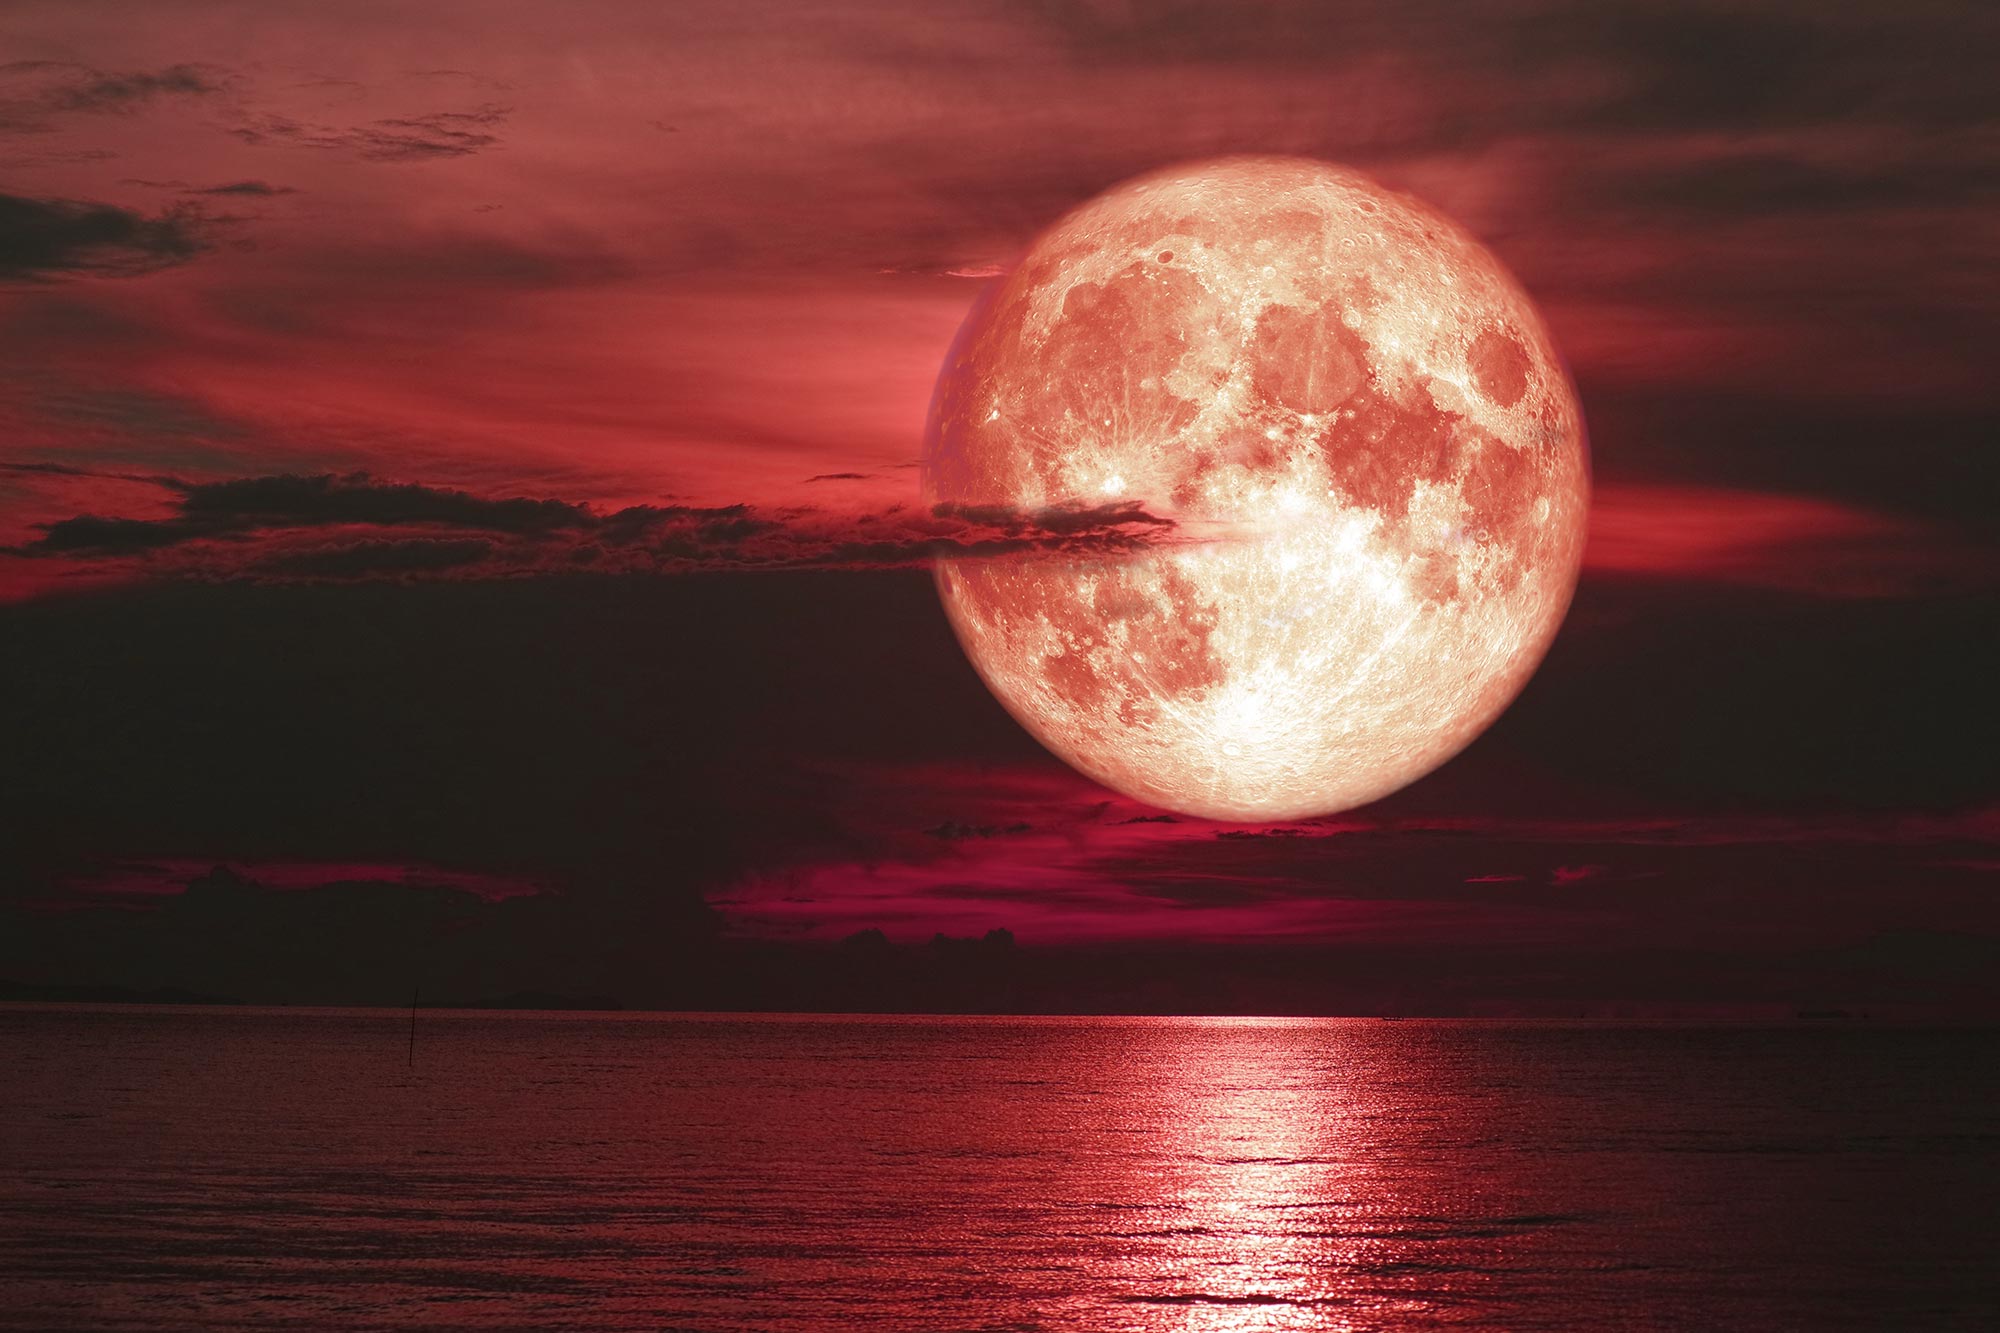 strawberry moon over ocean